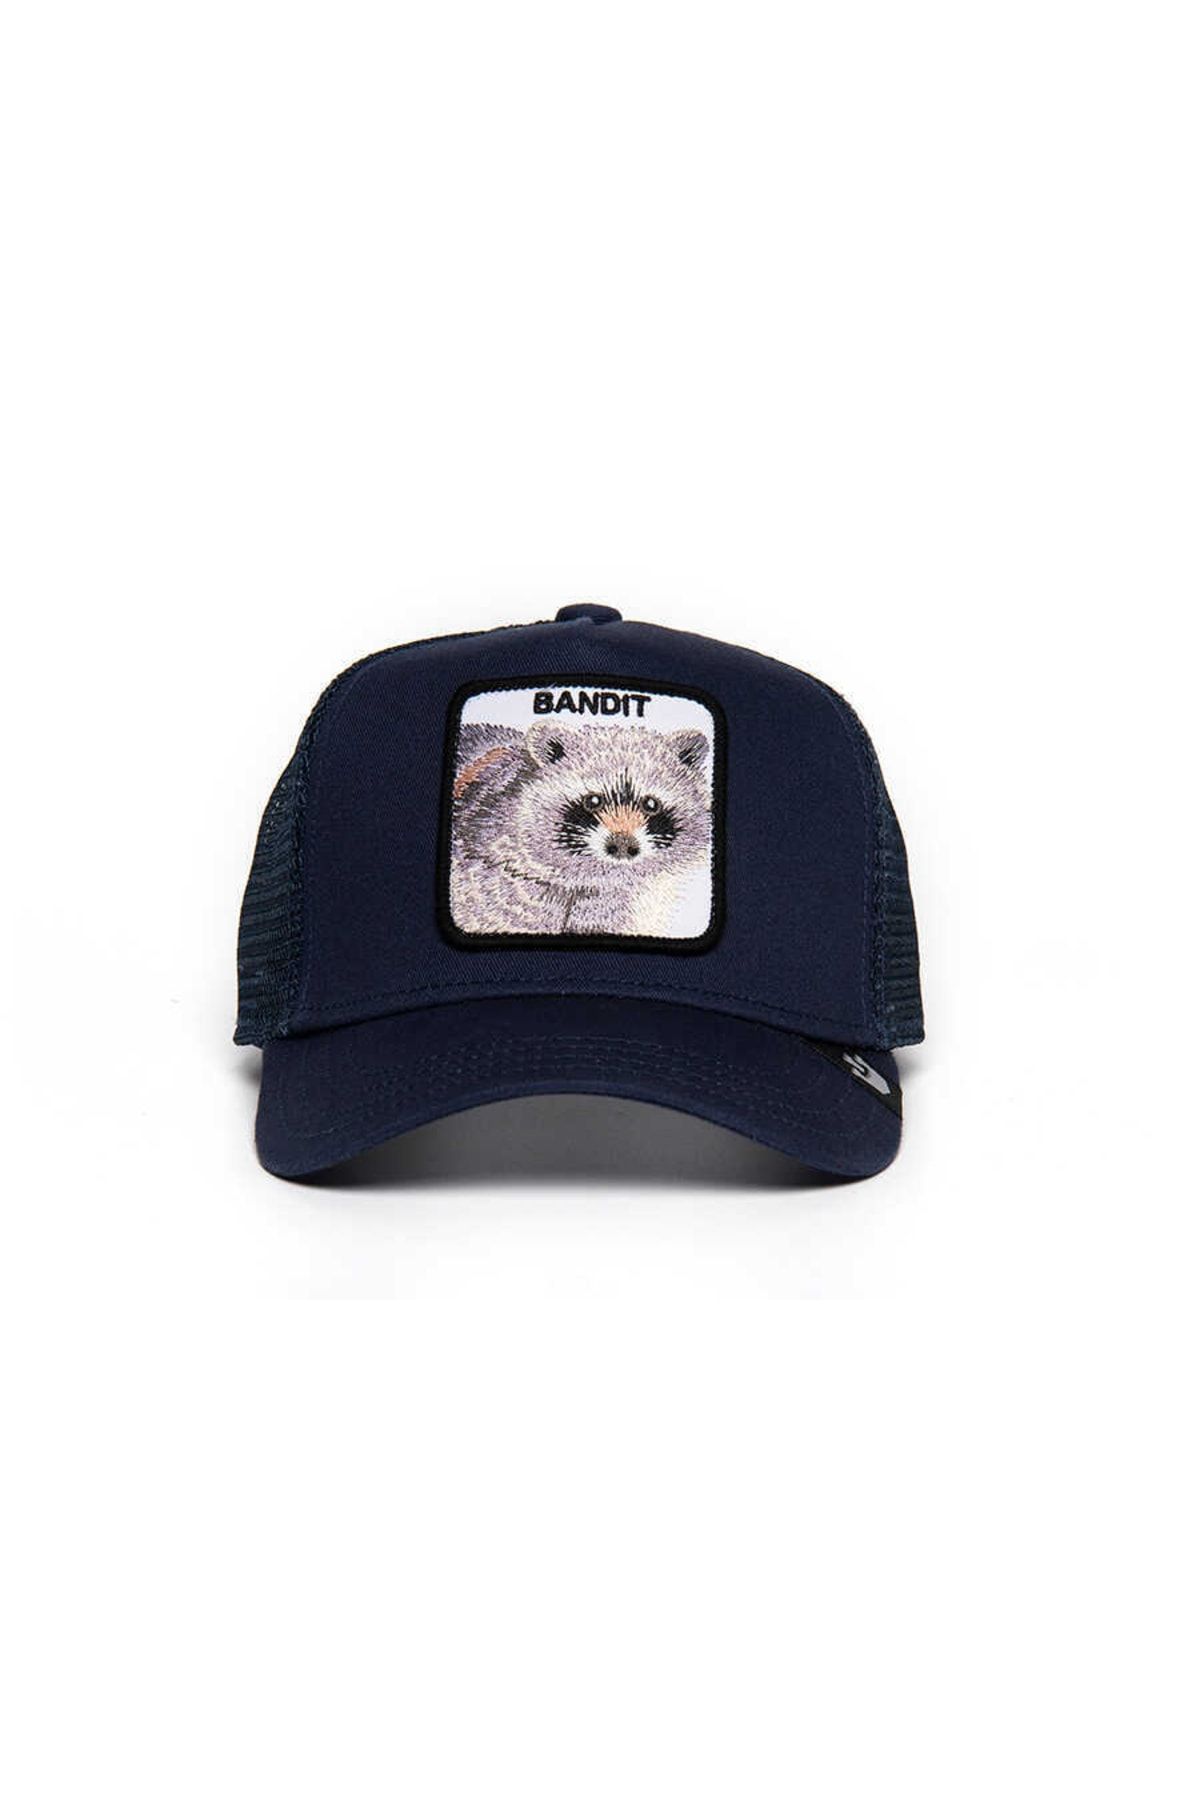 Goorin Bros . کلاه بچه گانه Sticky Bandit (Raccoon Figured) 201-0009 آبی استاندارد